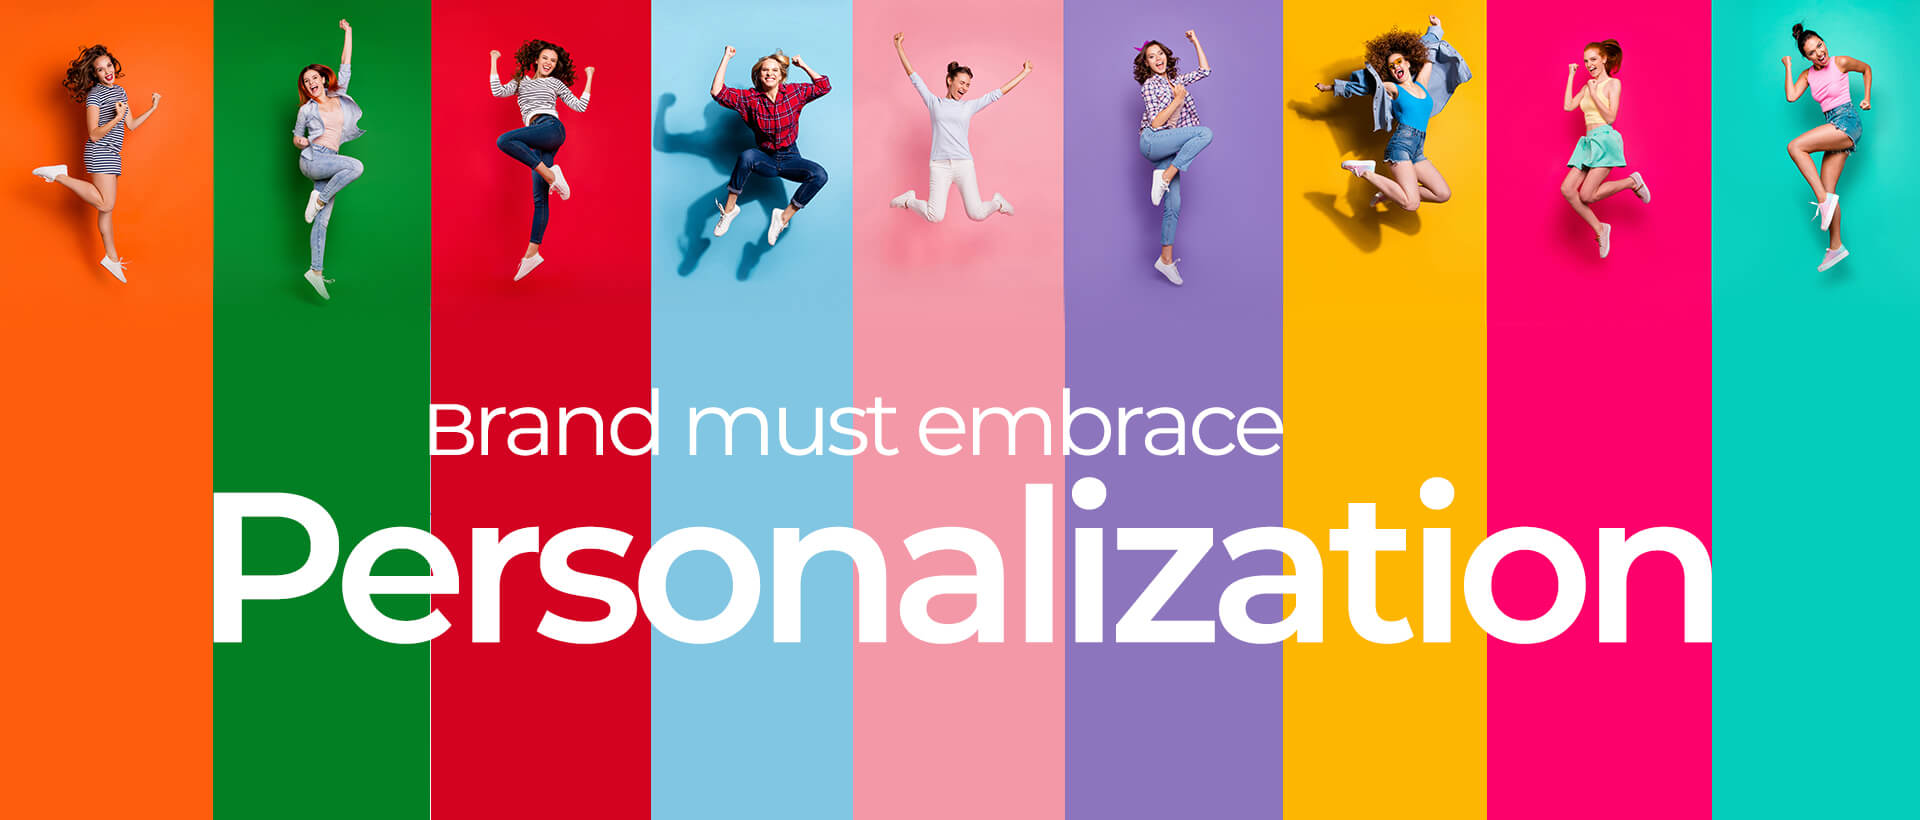 Brand must embrace Personalization